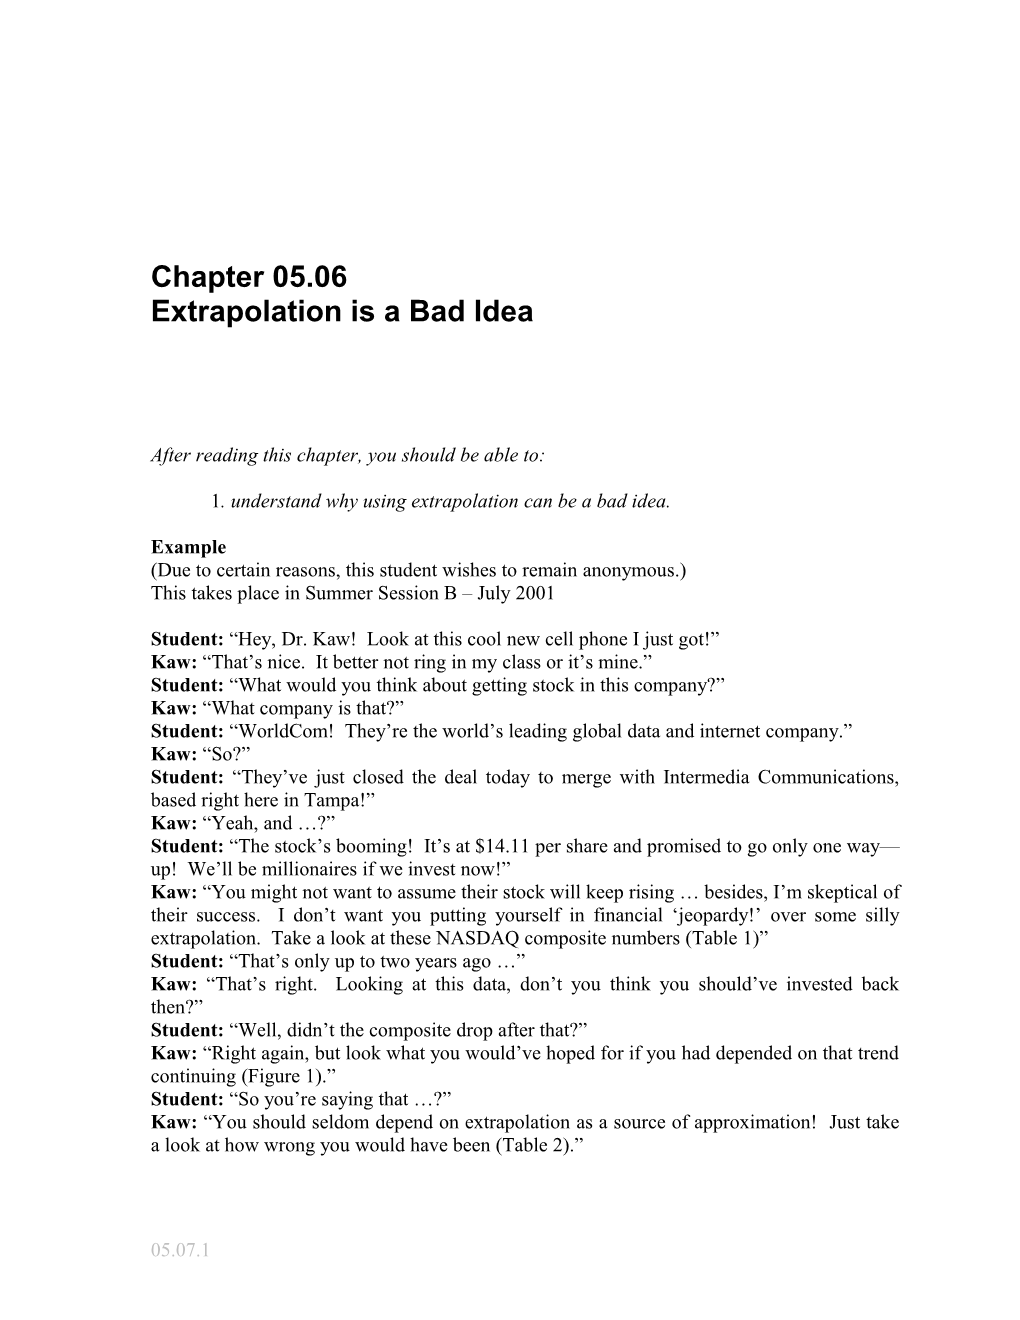 Extrapolation Example Textbook Notes: Interpolation: General Engineering